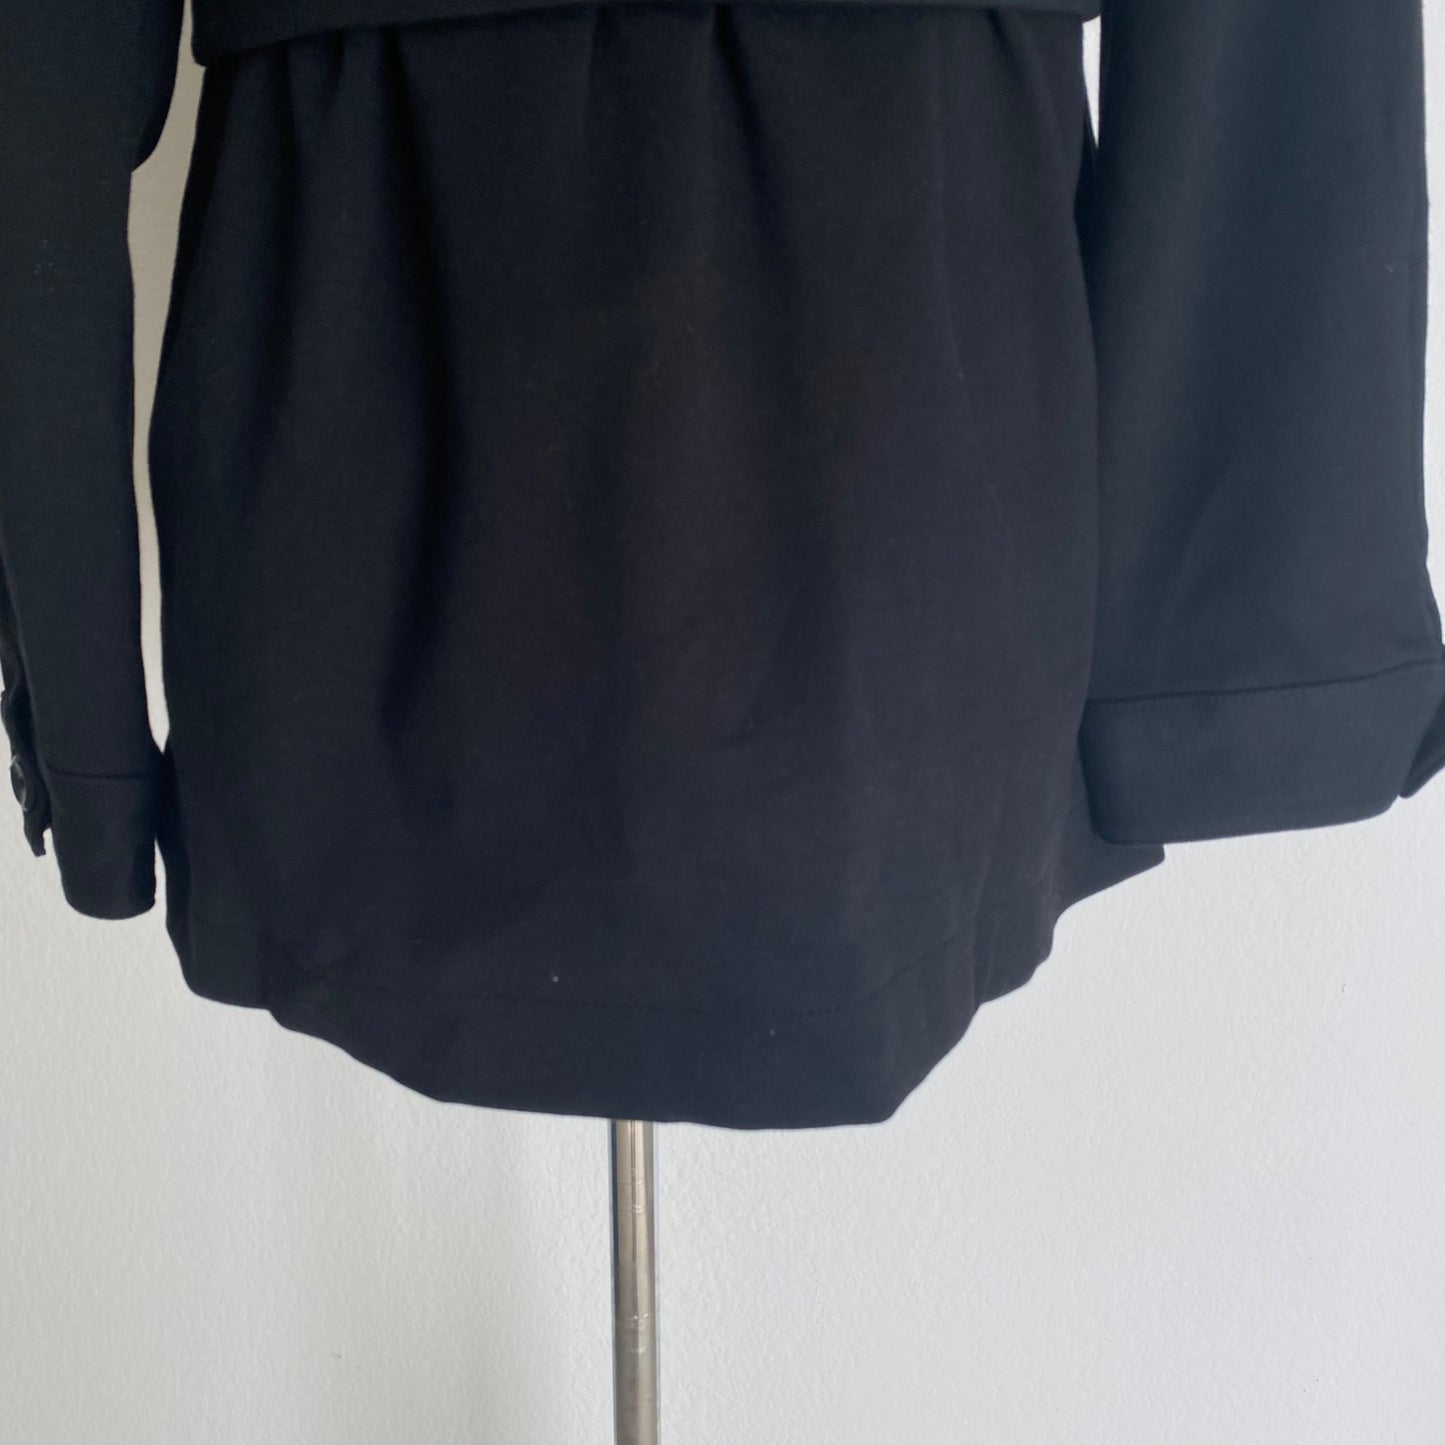 Gap sz M 100% cotton Long sleeve hooded pea coat NWT